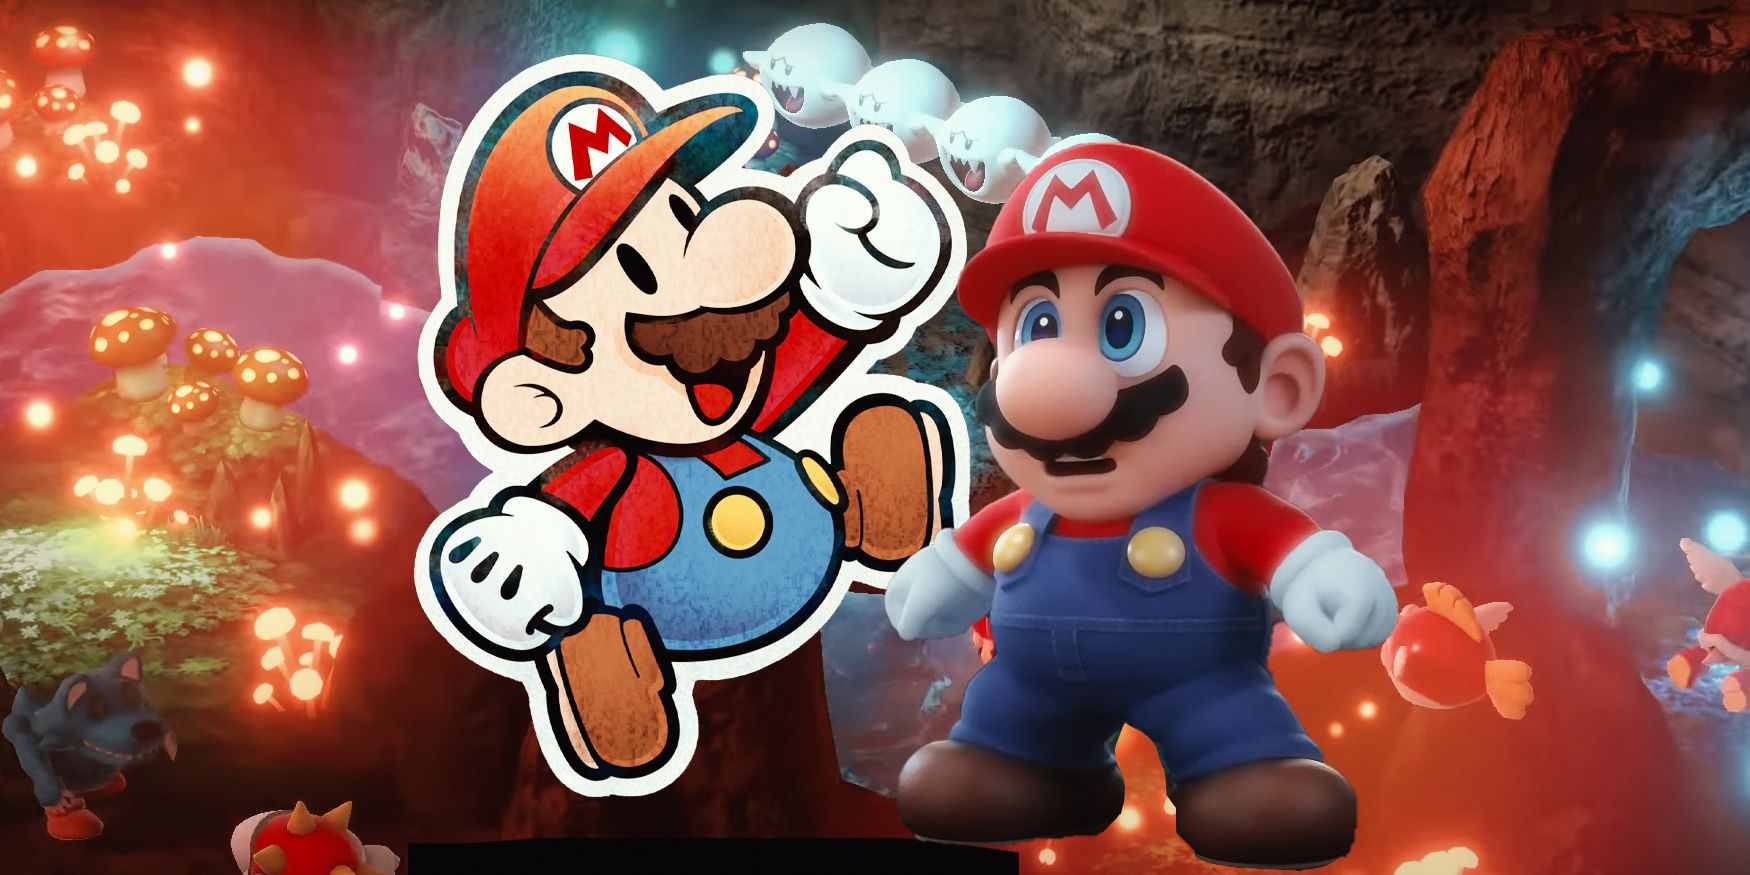 Mario vs. Pokémon: Why Is Mario RPG's Faithful Remake Better?